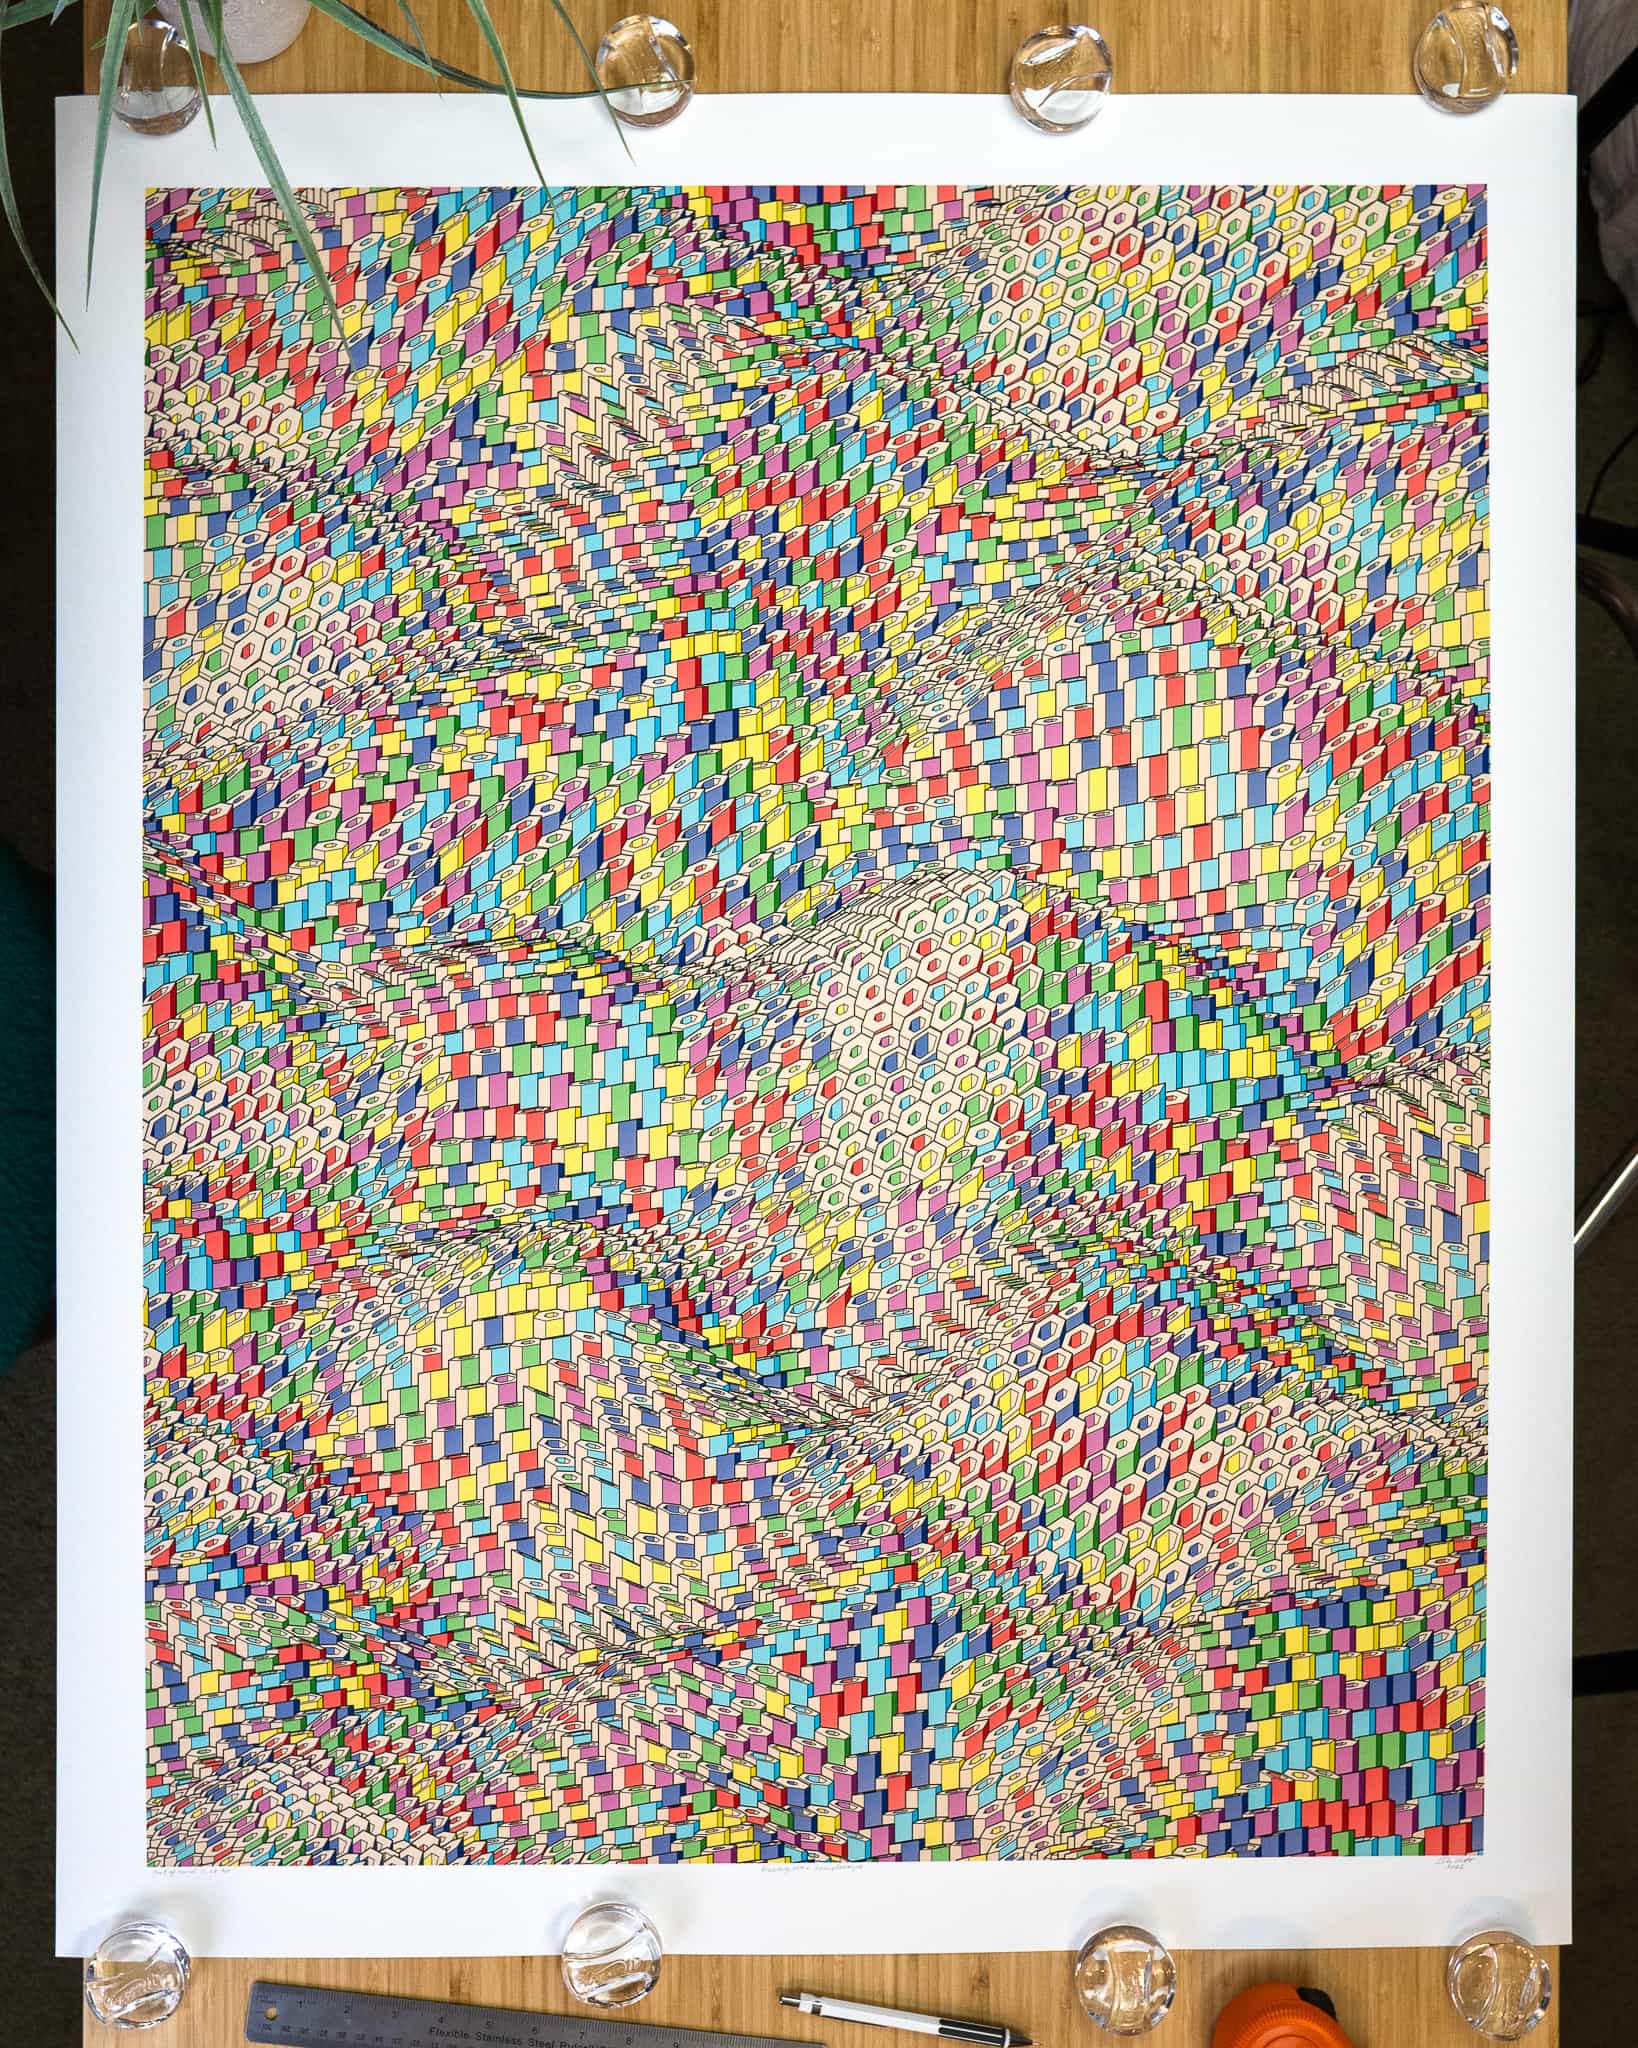 Hexagones Landscape - 32x40" fine art print, artist's proof, signed